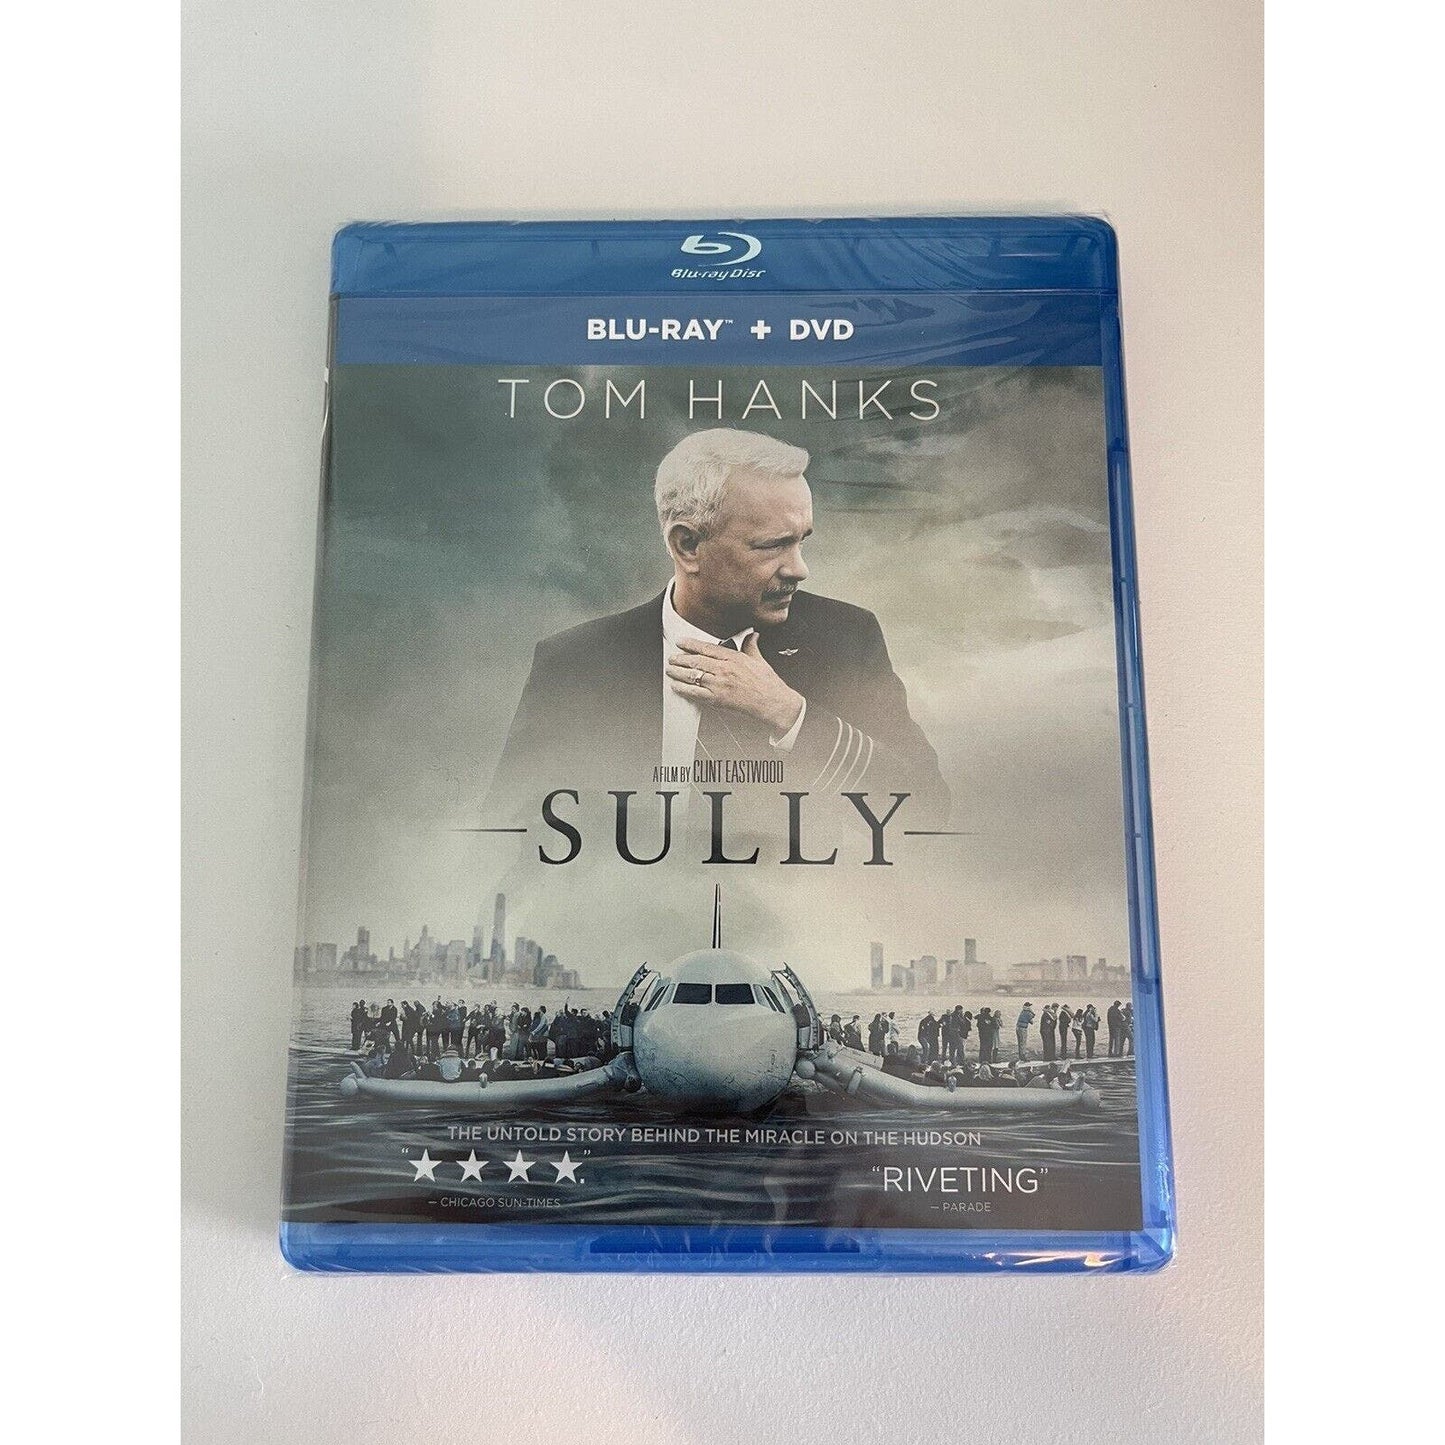 Sully (BLU-RAY + DVD) - BRAND NEW, SEALED - Tom Hanks